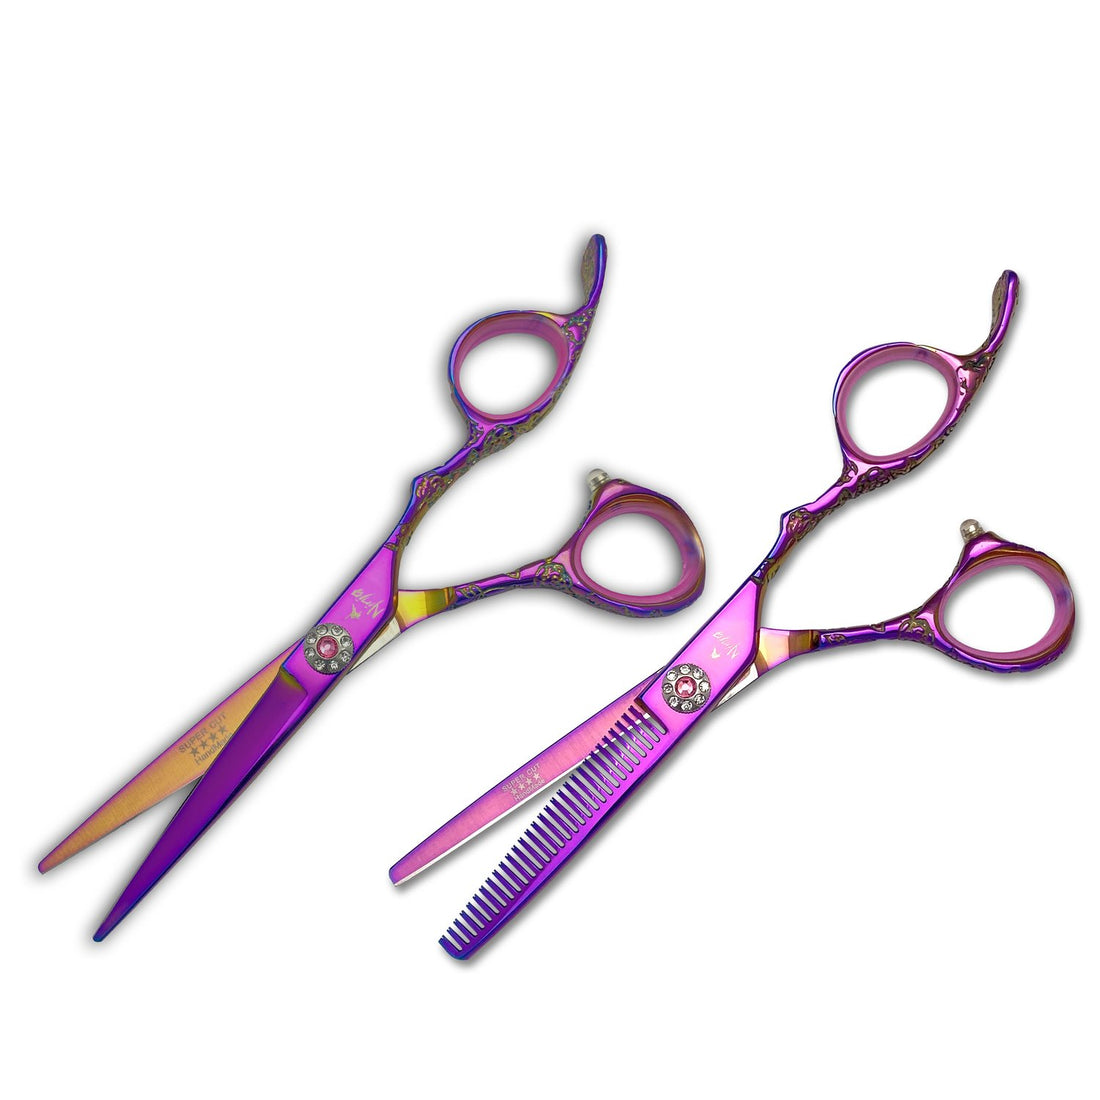 15 Best Hairdressing Scissors to Buy in 2022